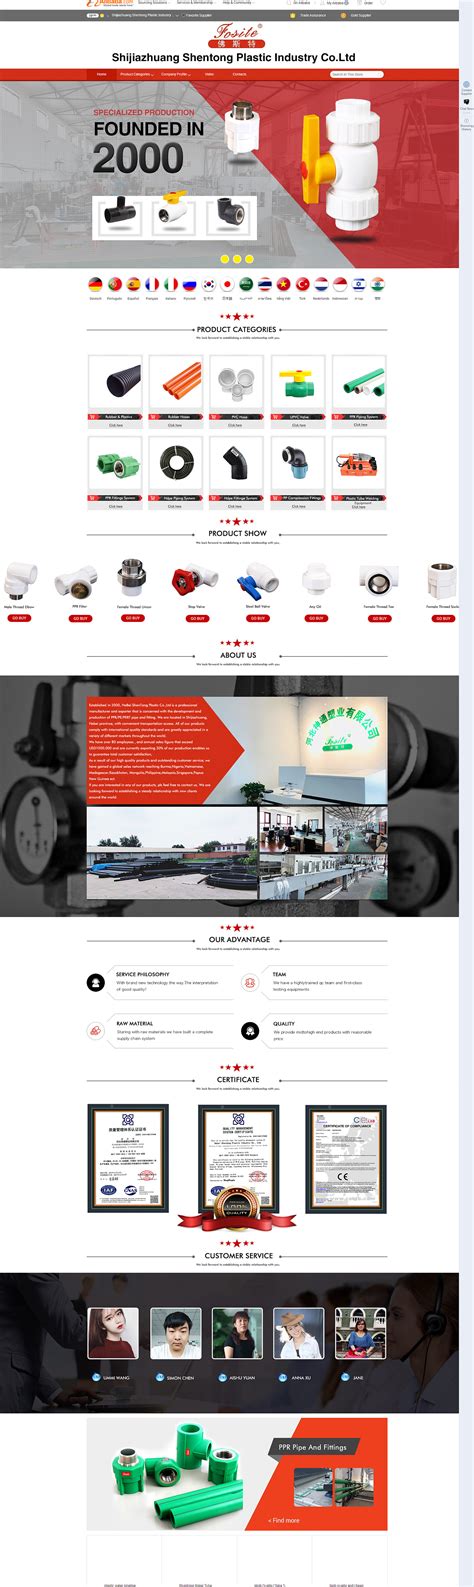 Tempsen英文网站建设案例,2017英文网站页面设计欣赏,外文网站制作案例-海淘科技